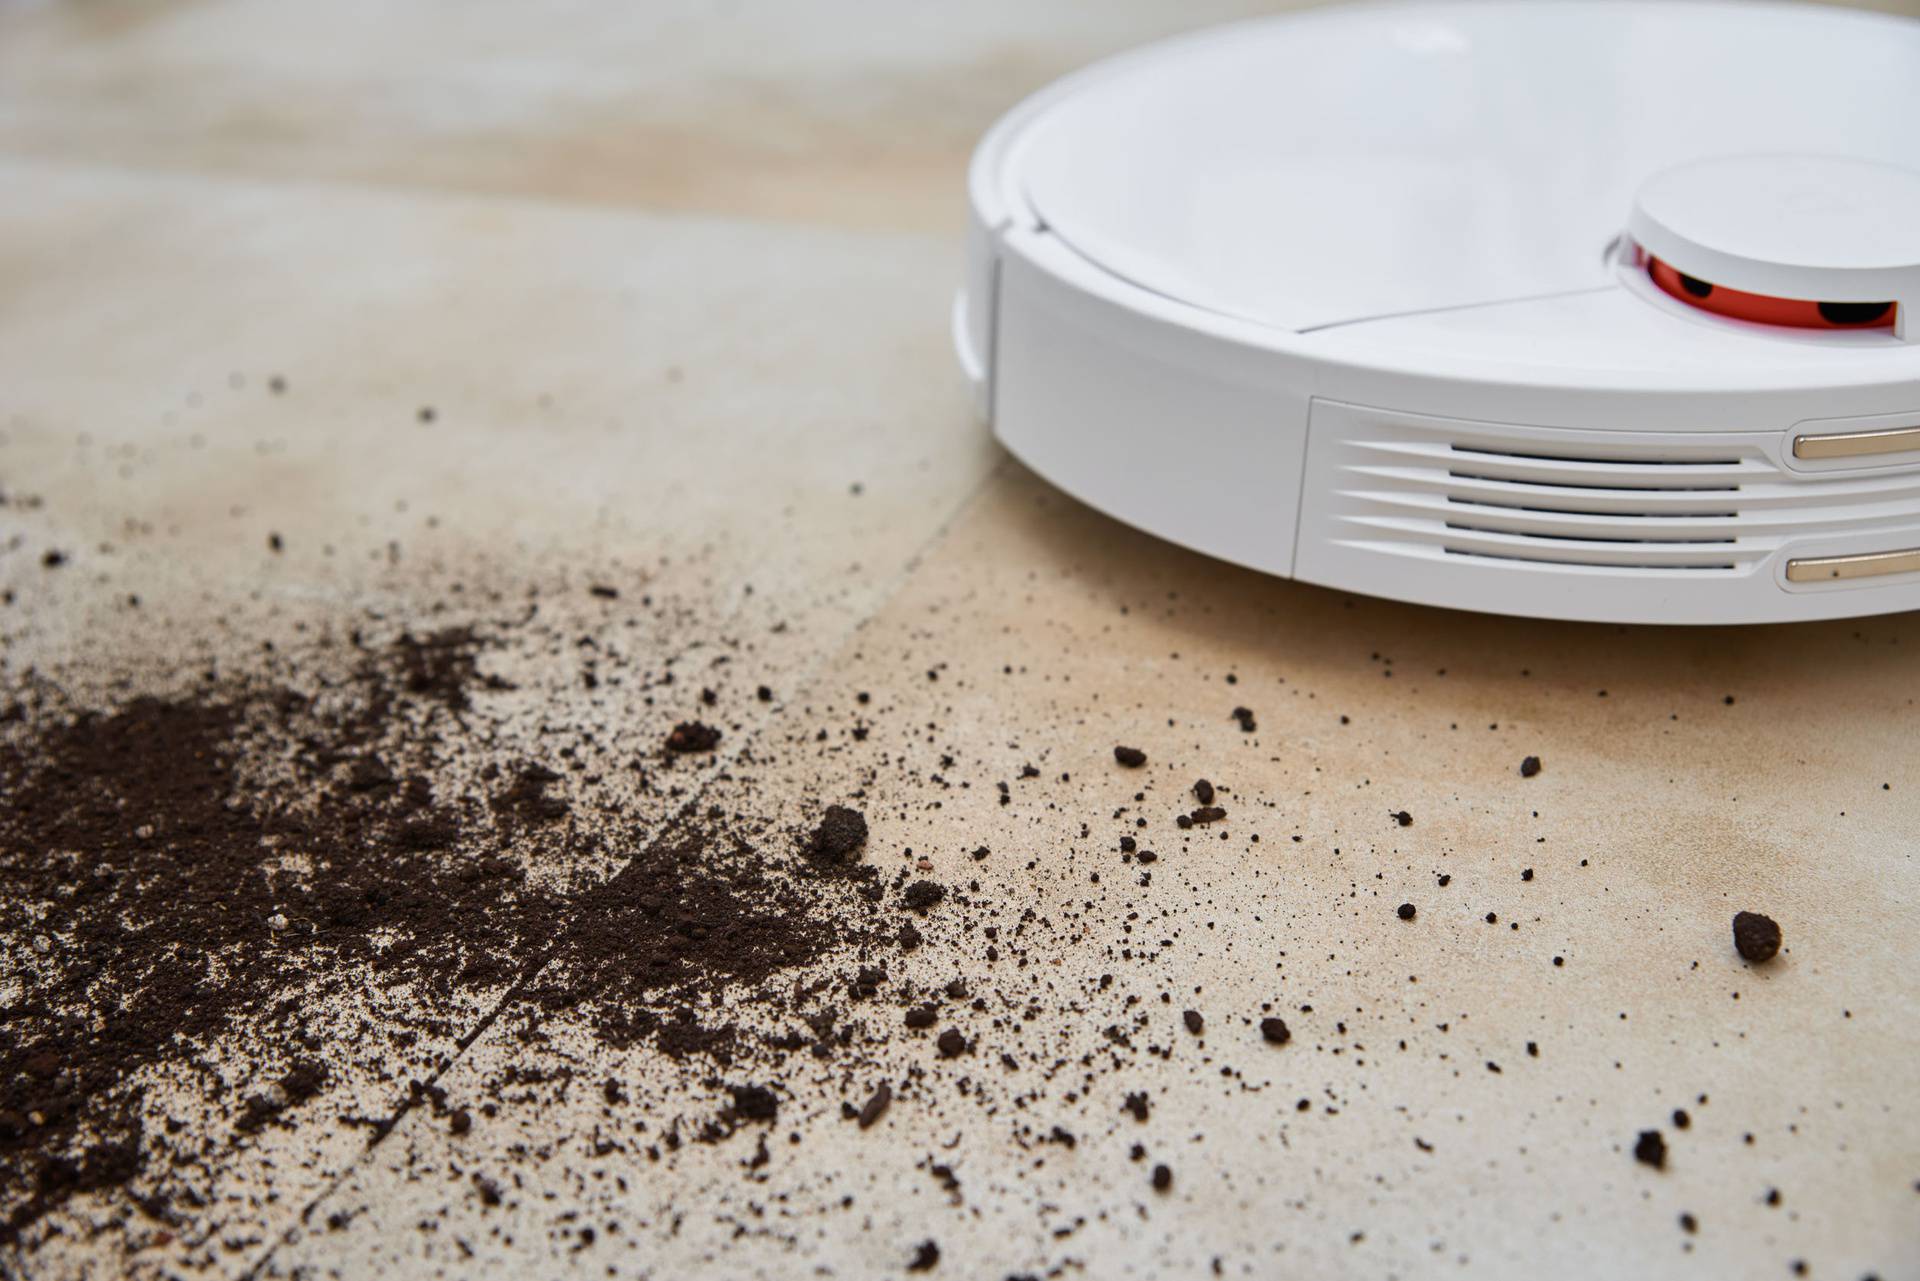 Robot vacuum cleaner cleans dirt on floor. Smart home concept